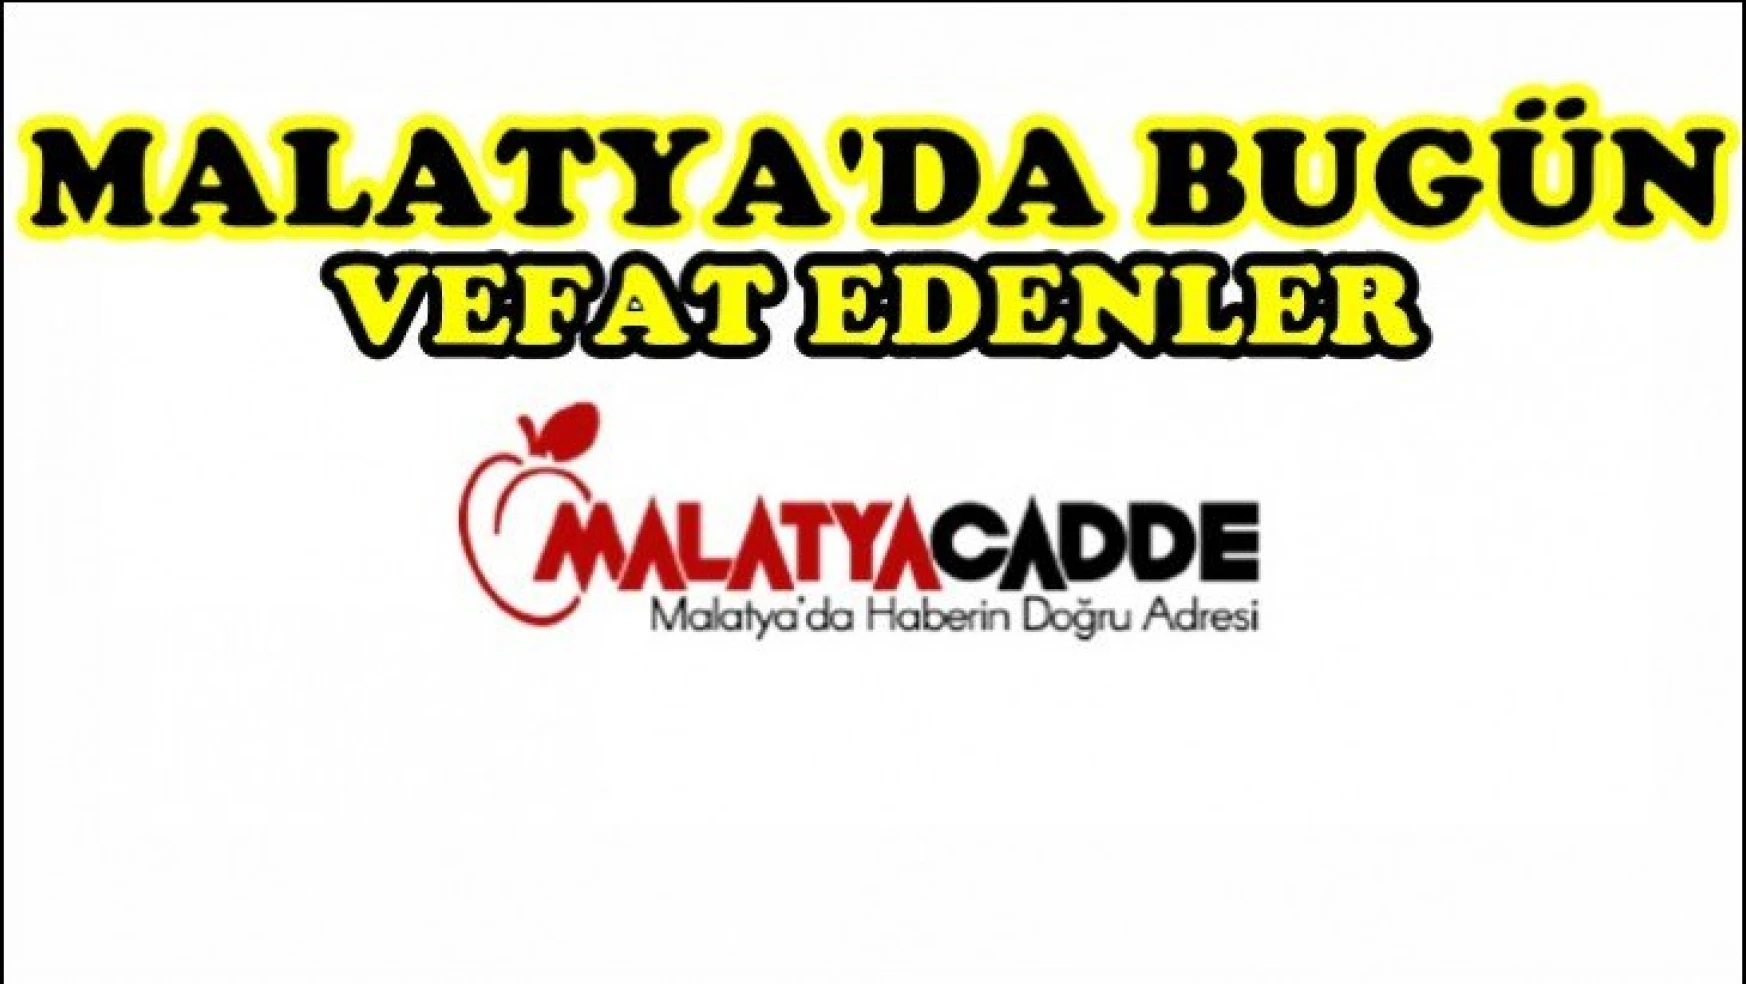 Malatya'da Bugün 25 kişi Hayatını Kaybetti